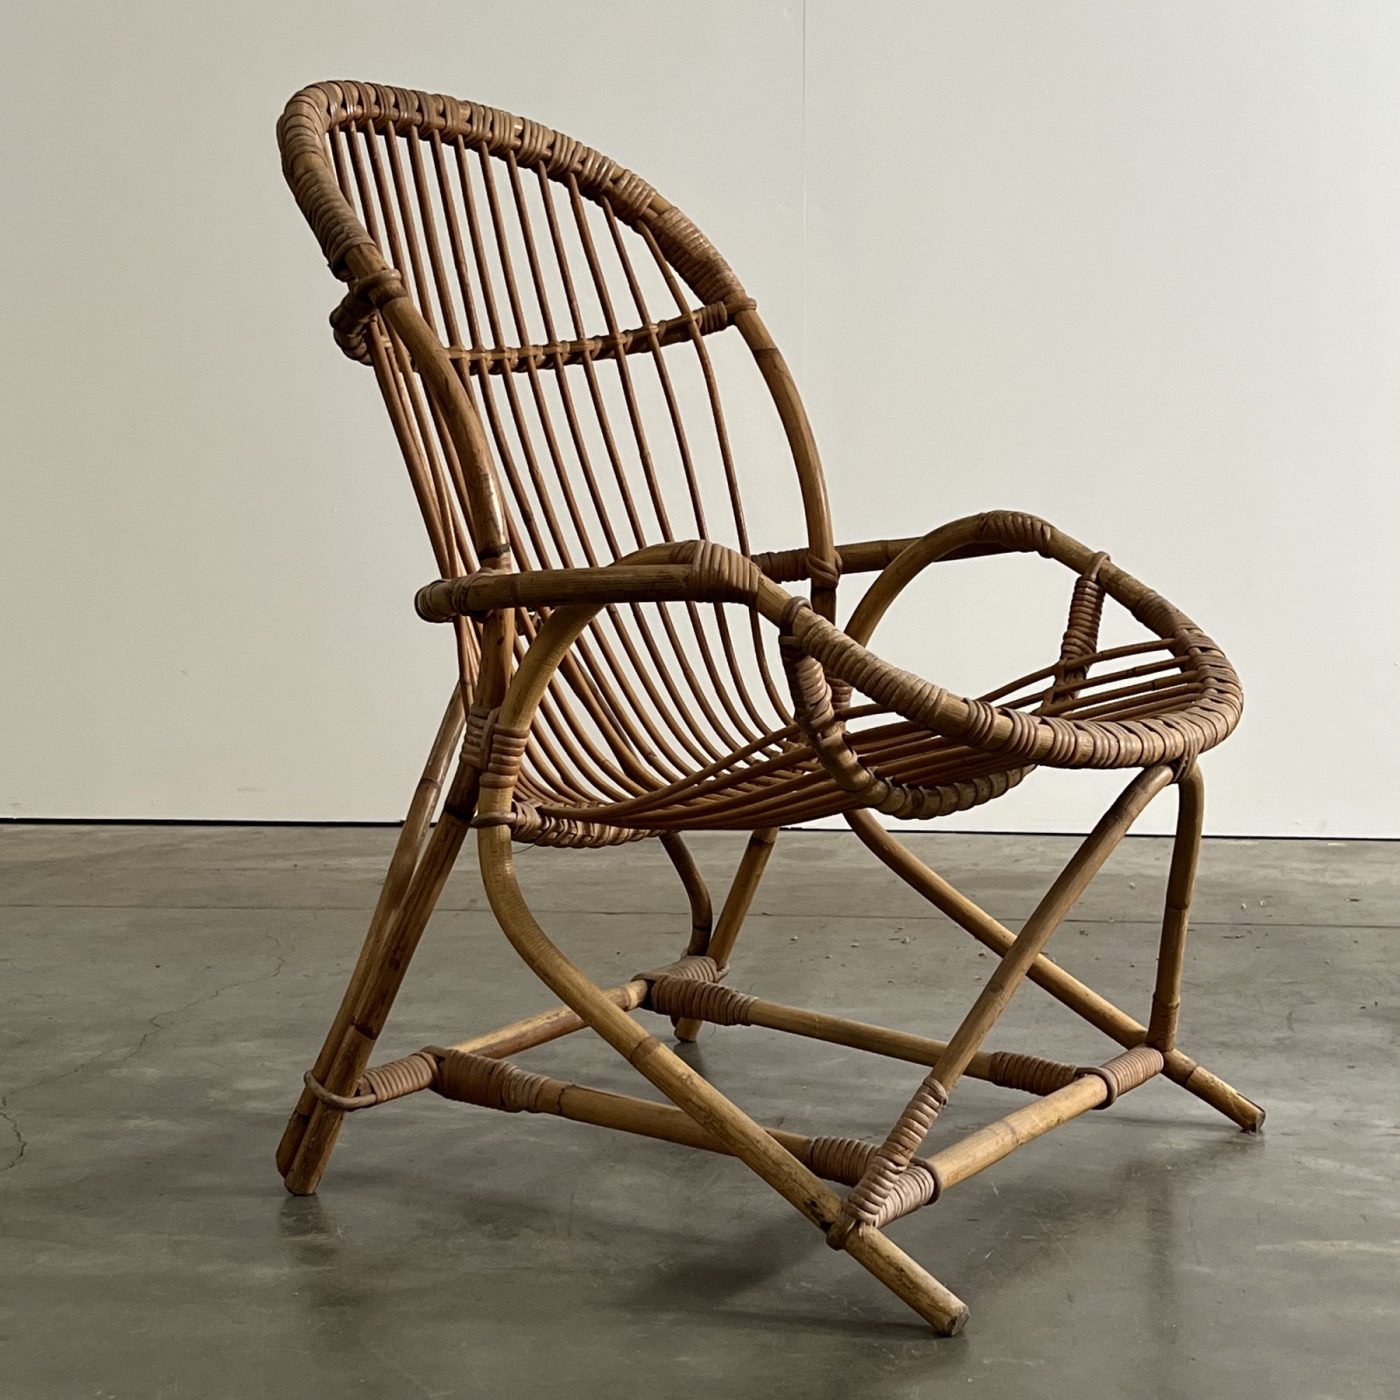 objet-vagabond-rattan-armchairs0005